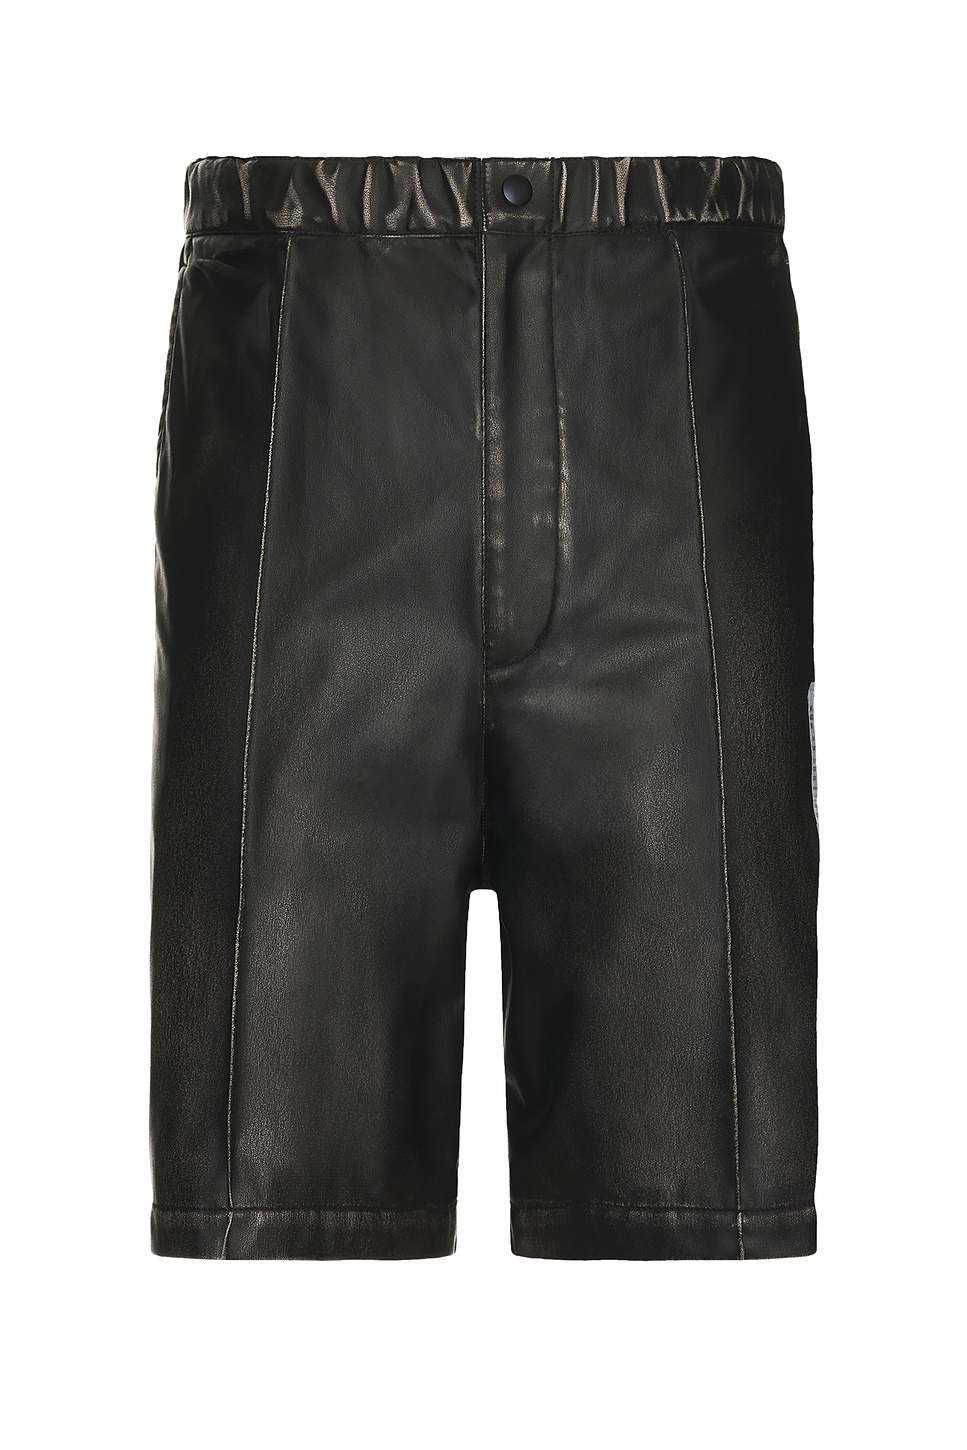 Image 1 of Maison MIHARA YASUHIRO Vegan Leather Shorts in Black